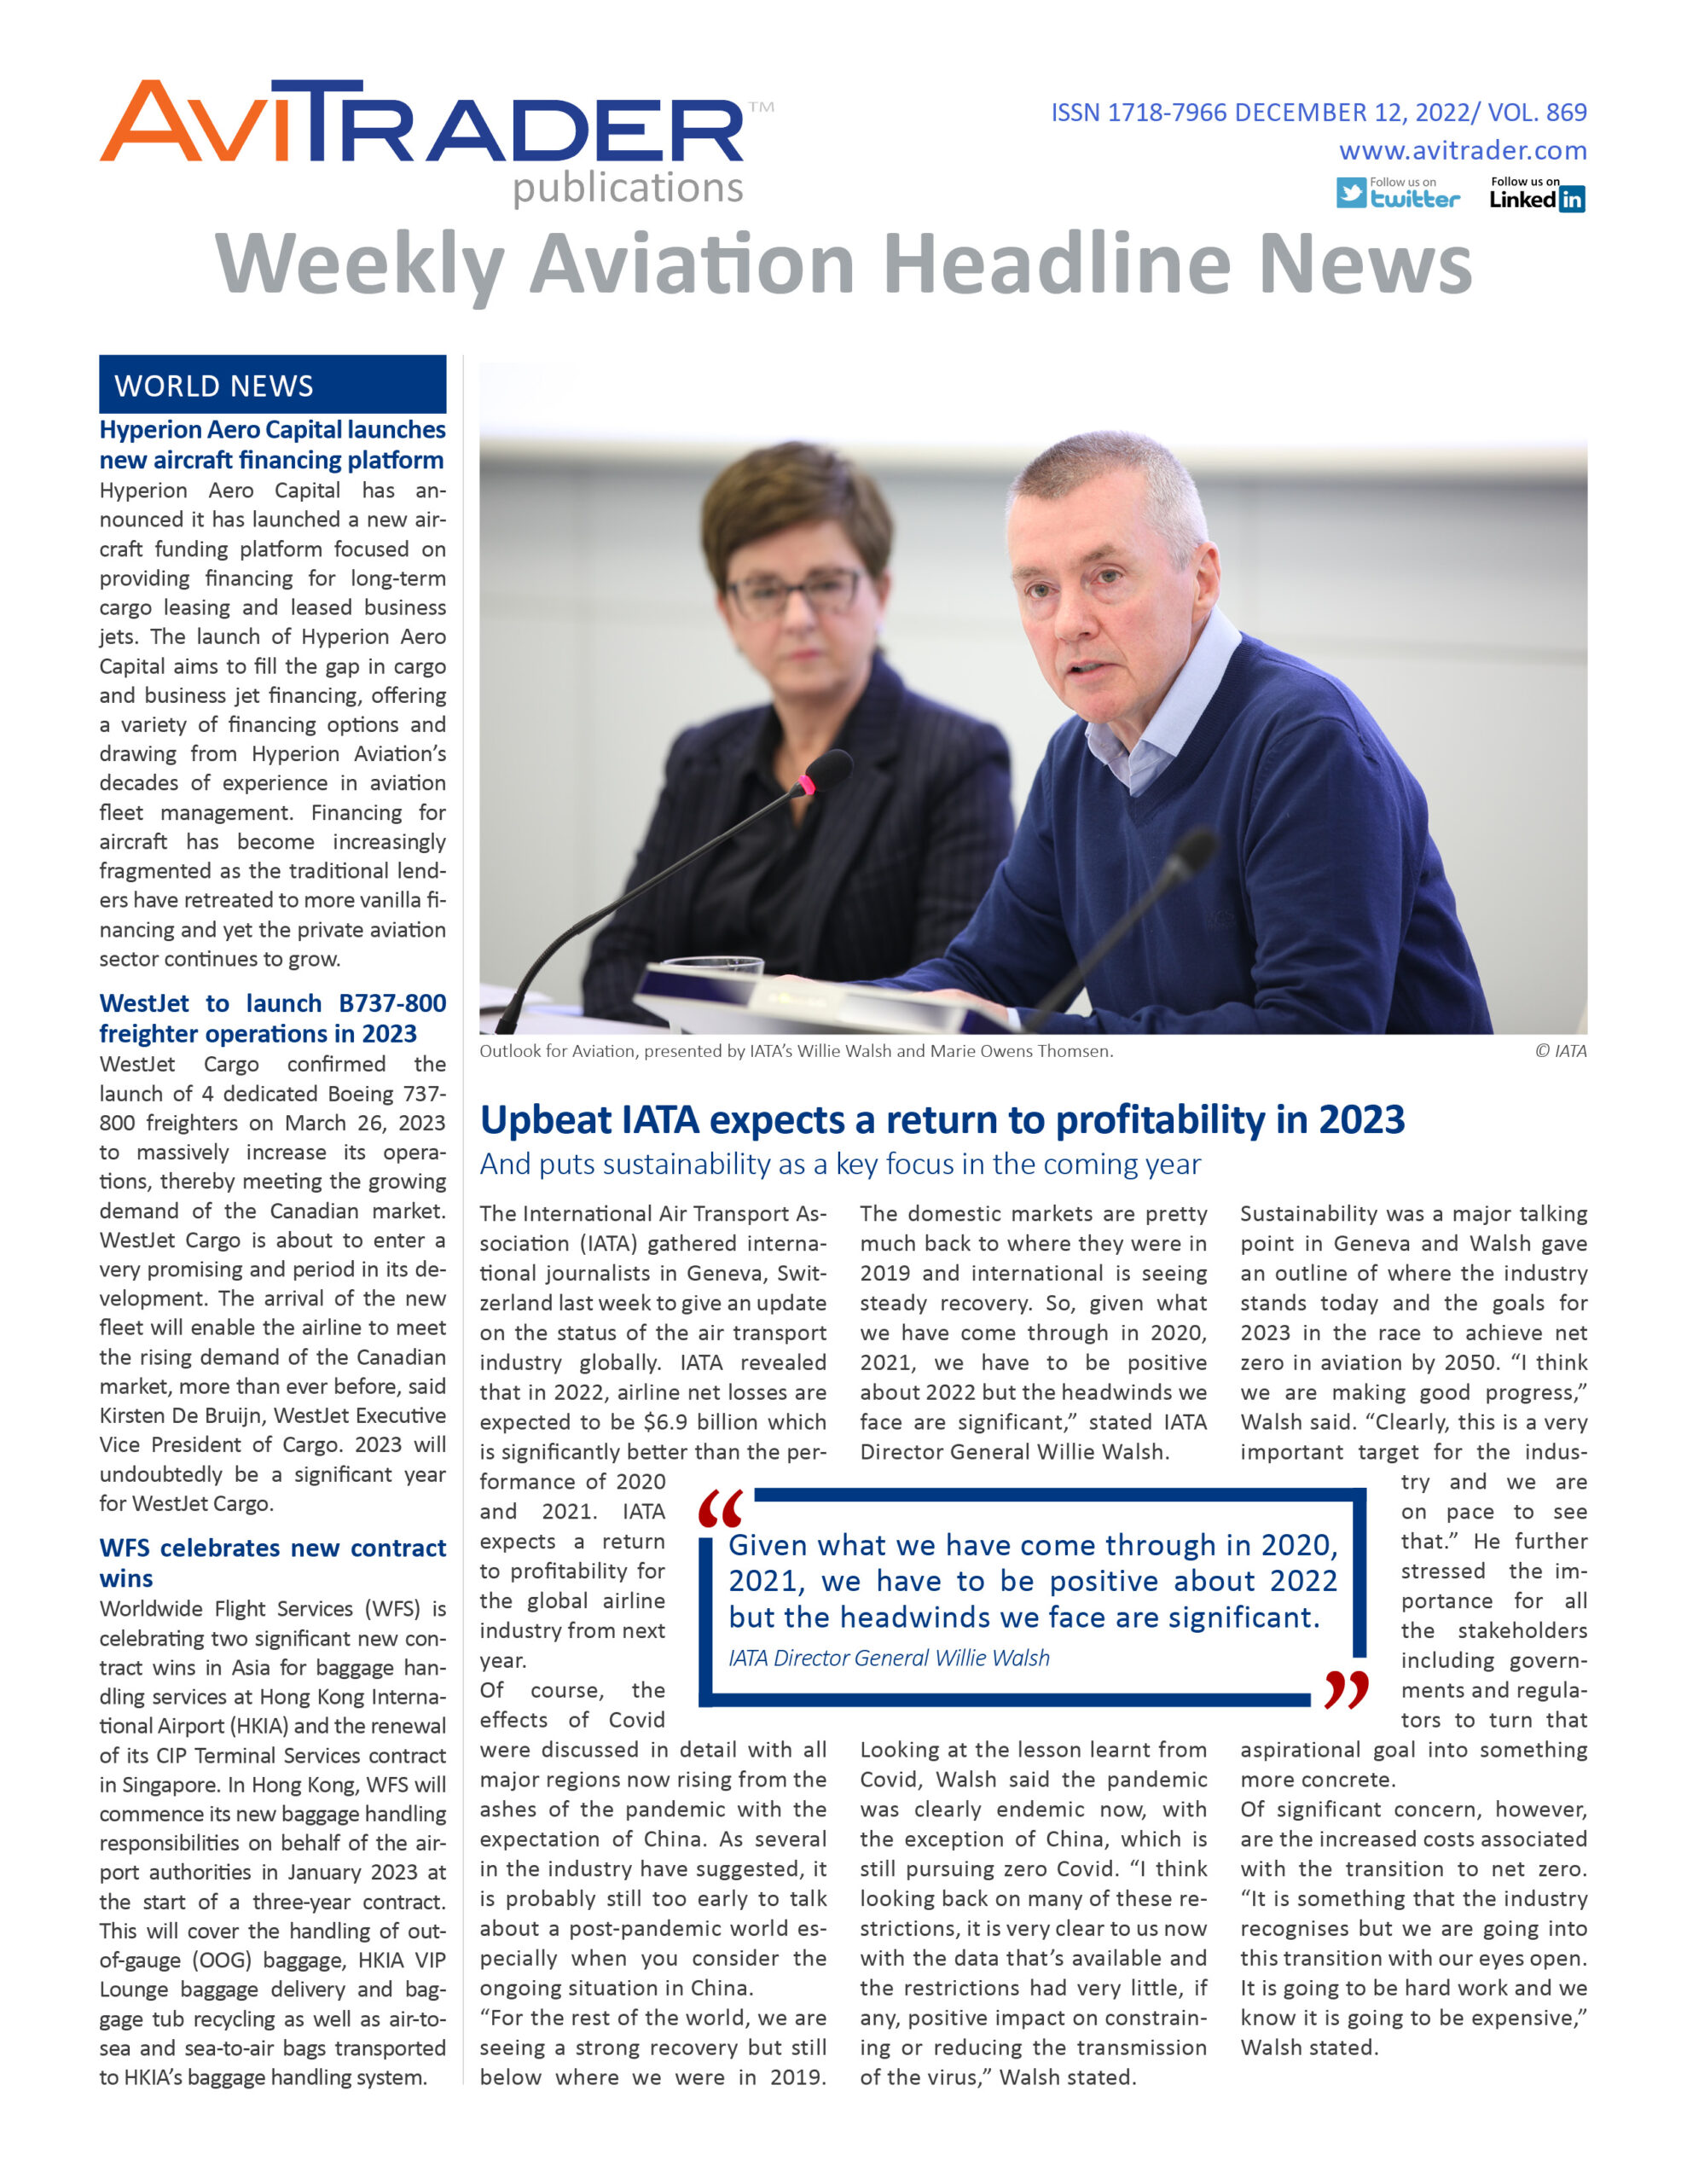 AviTrader_Weekly_Headline_News_Cover_2022-12-12